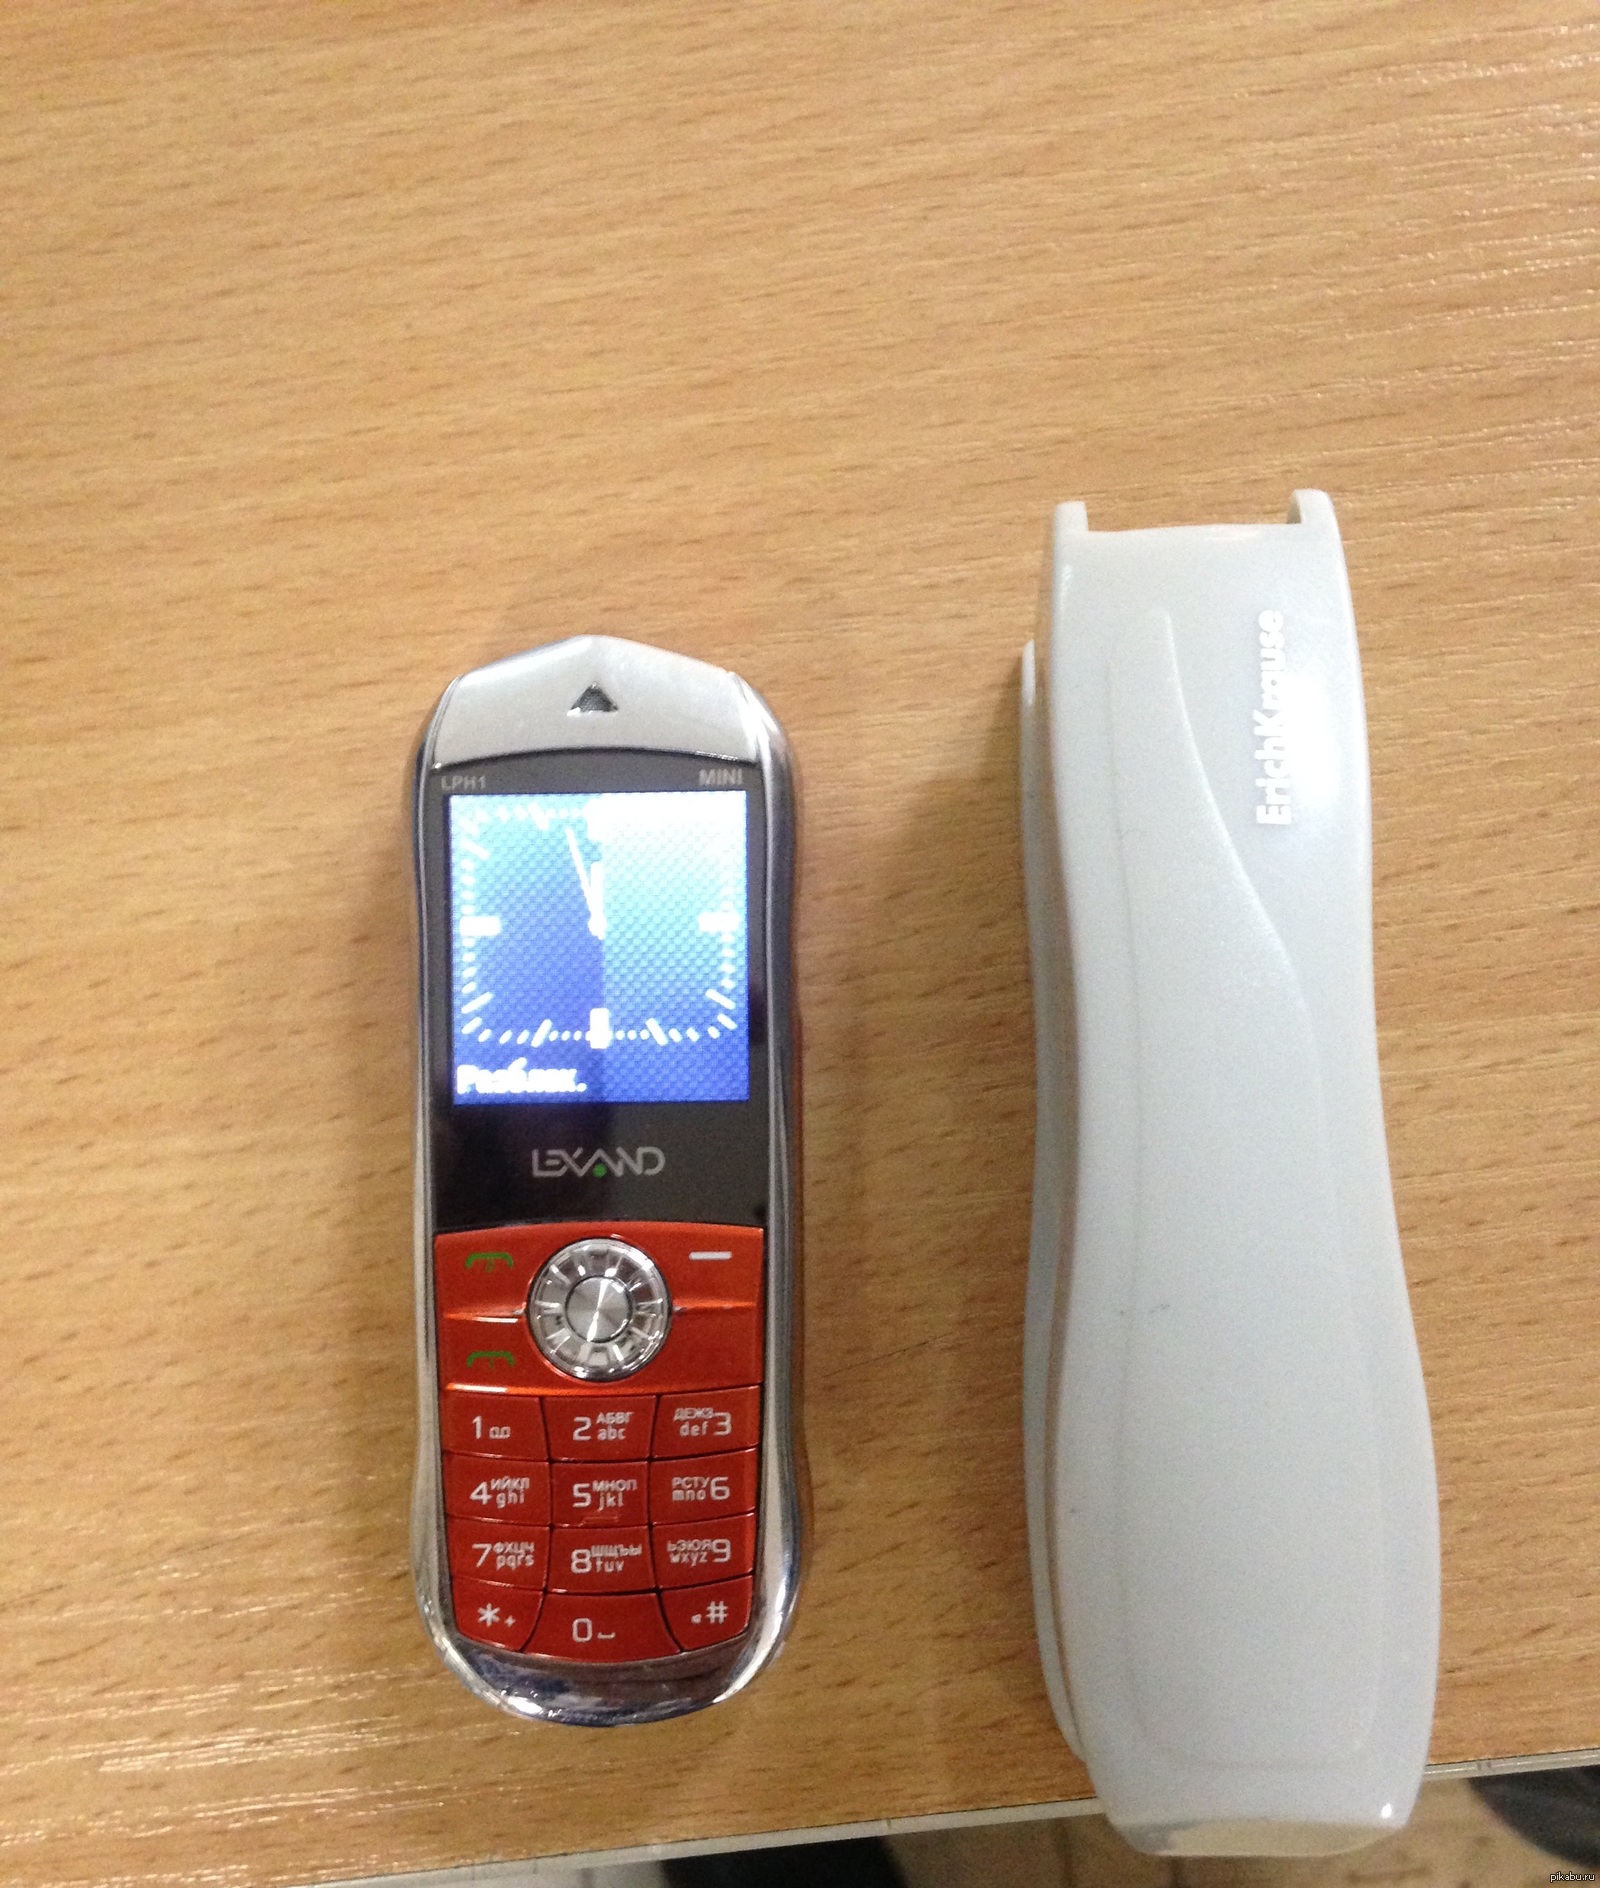 Мини маленький телефон. Маленький телефон. Очень маленький телефон. Самый маленький мобильный телефон. Маленький сотовый телефон машинка.